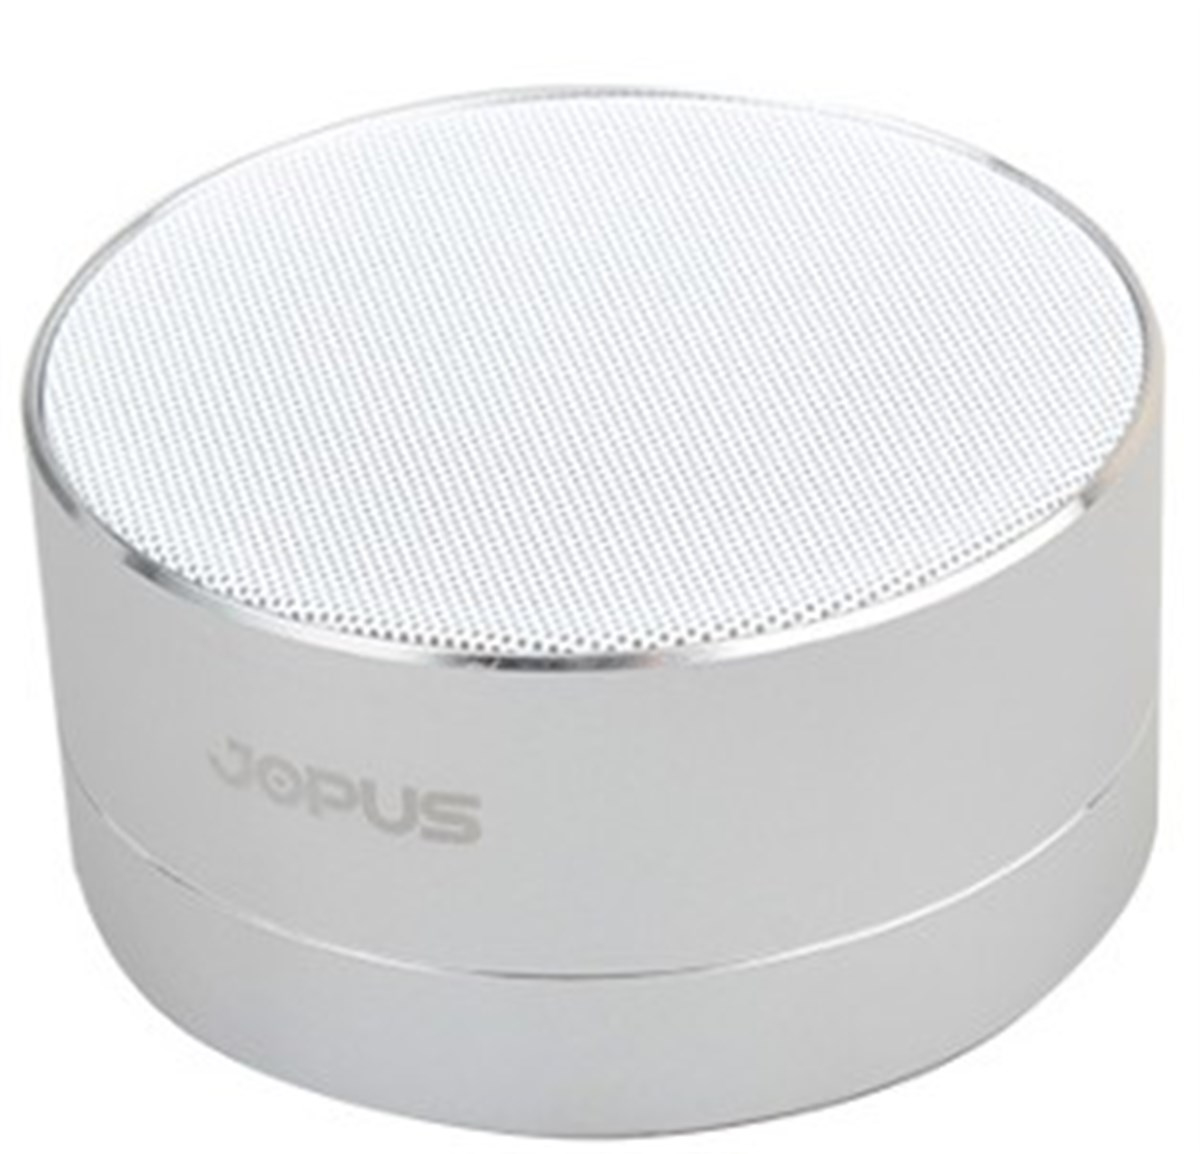 Bluetooth Hoparlör - Jopus Wizz 7 Bluetooth Ses Bombası | Mobicaps